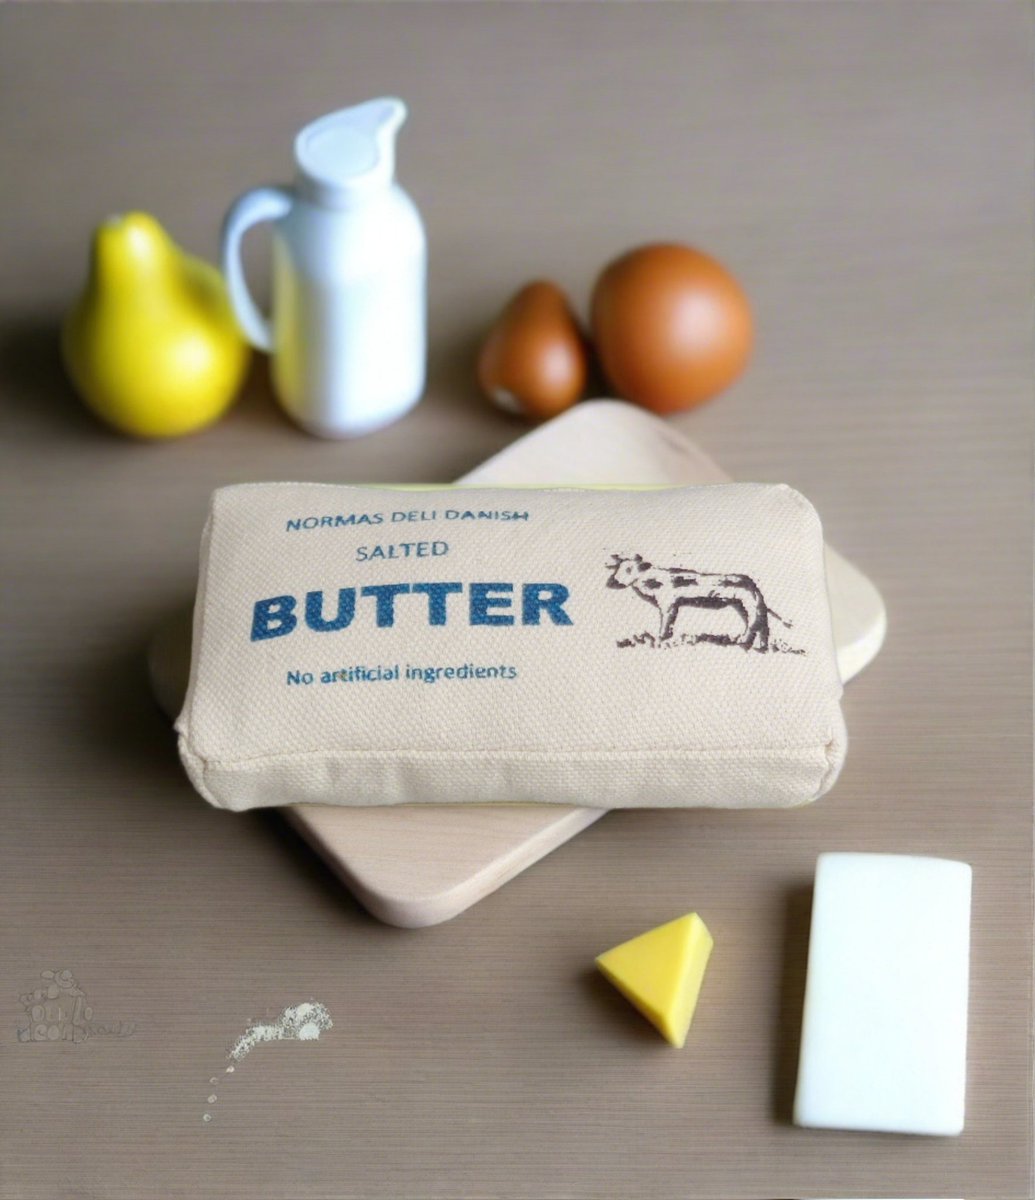 Bread and butter, handmade Canvas toy's 
#normadot #toyshop #danishmade #pretendplay
instagram.com/p/C6eBTyLszRB/…